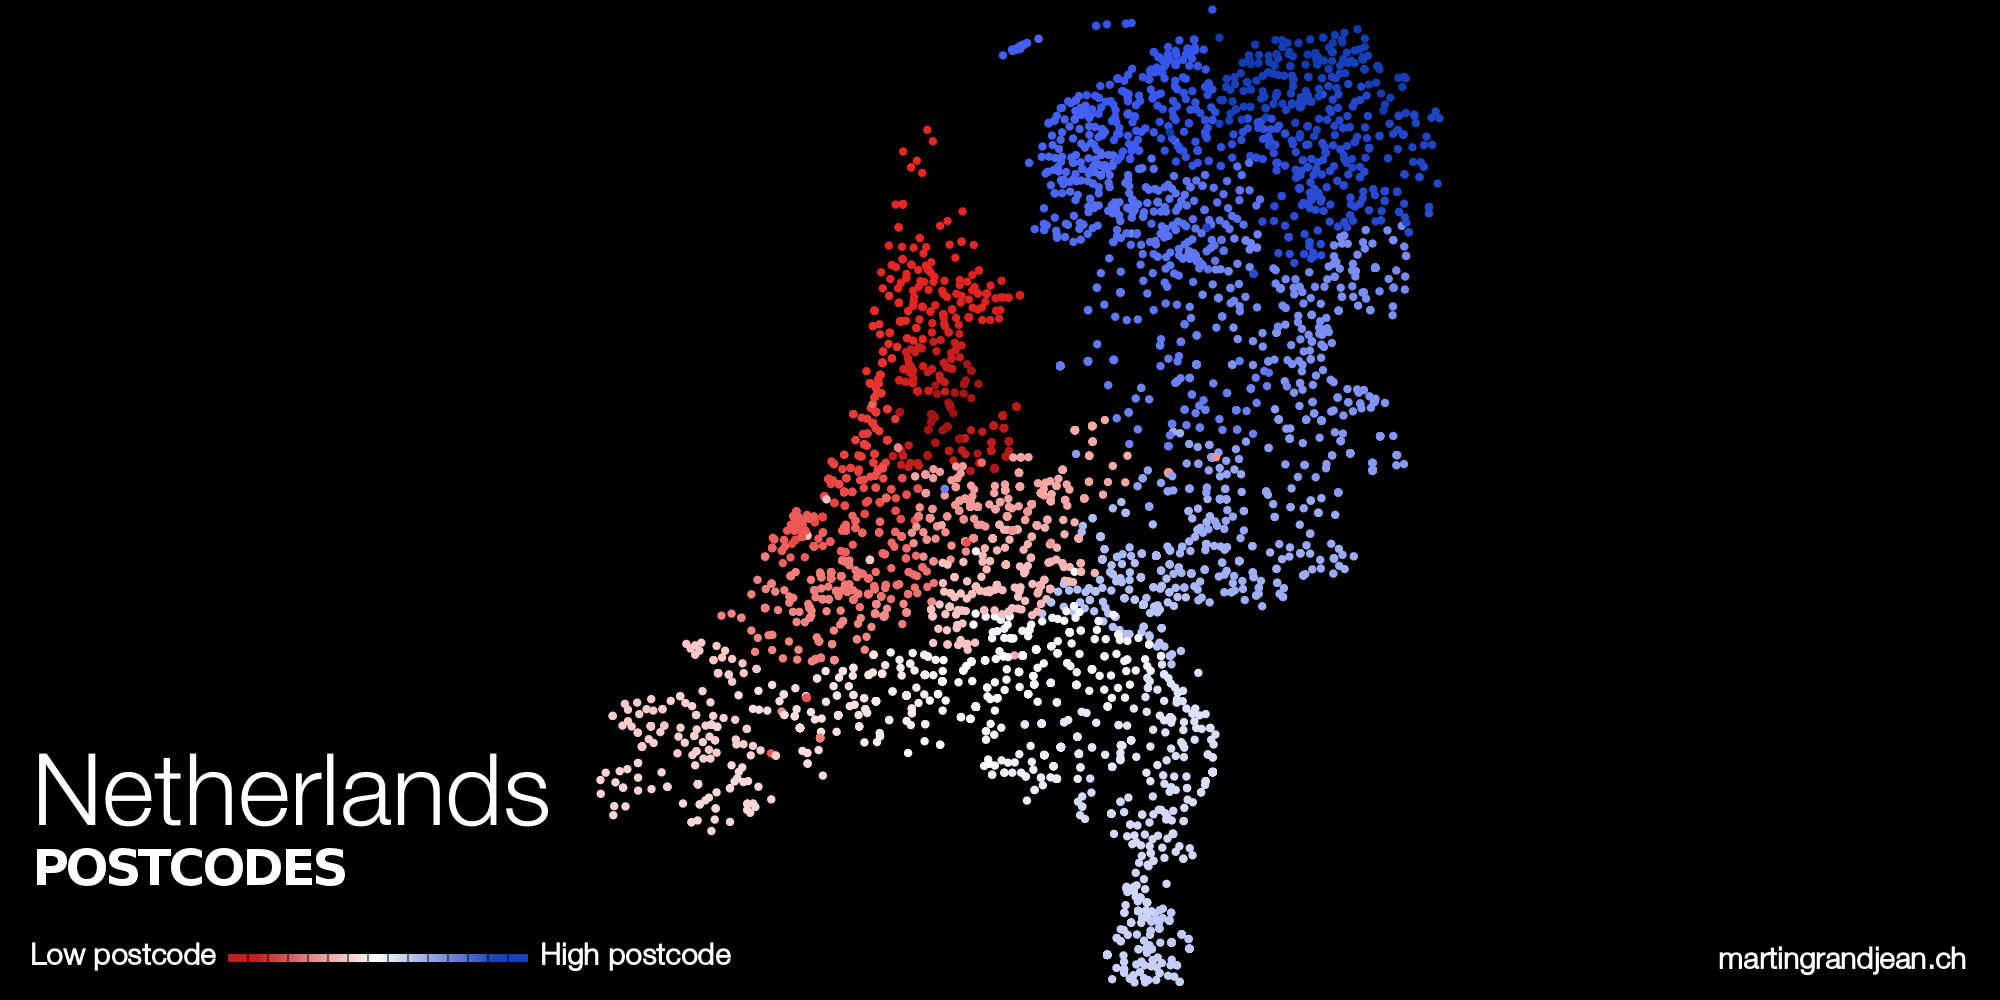 Netherlands postcodes mapping